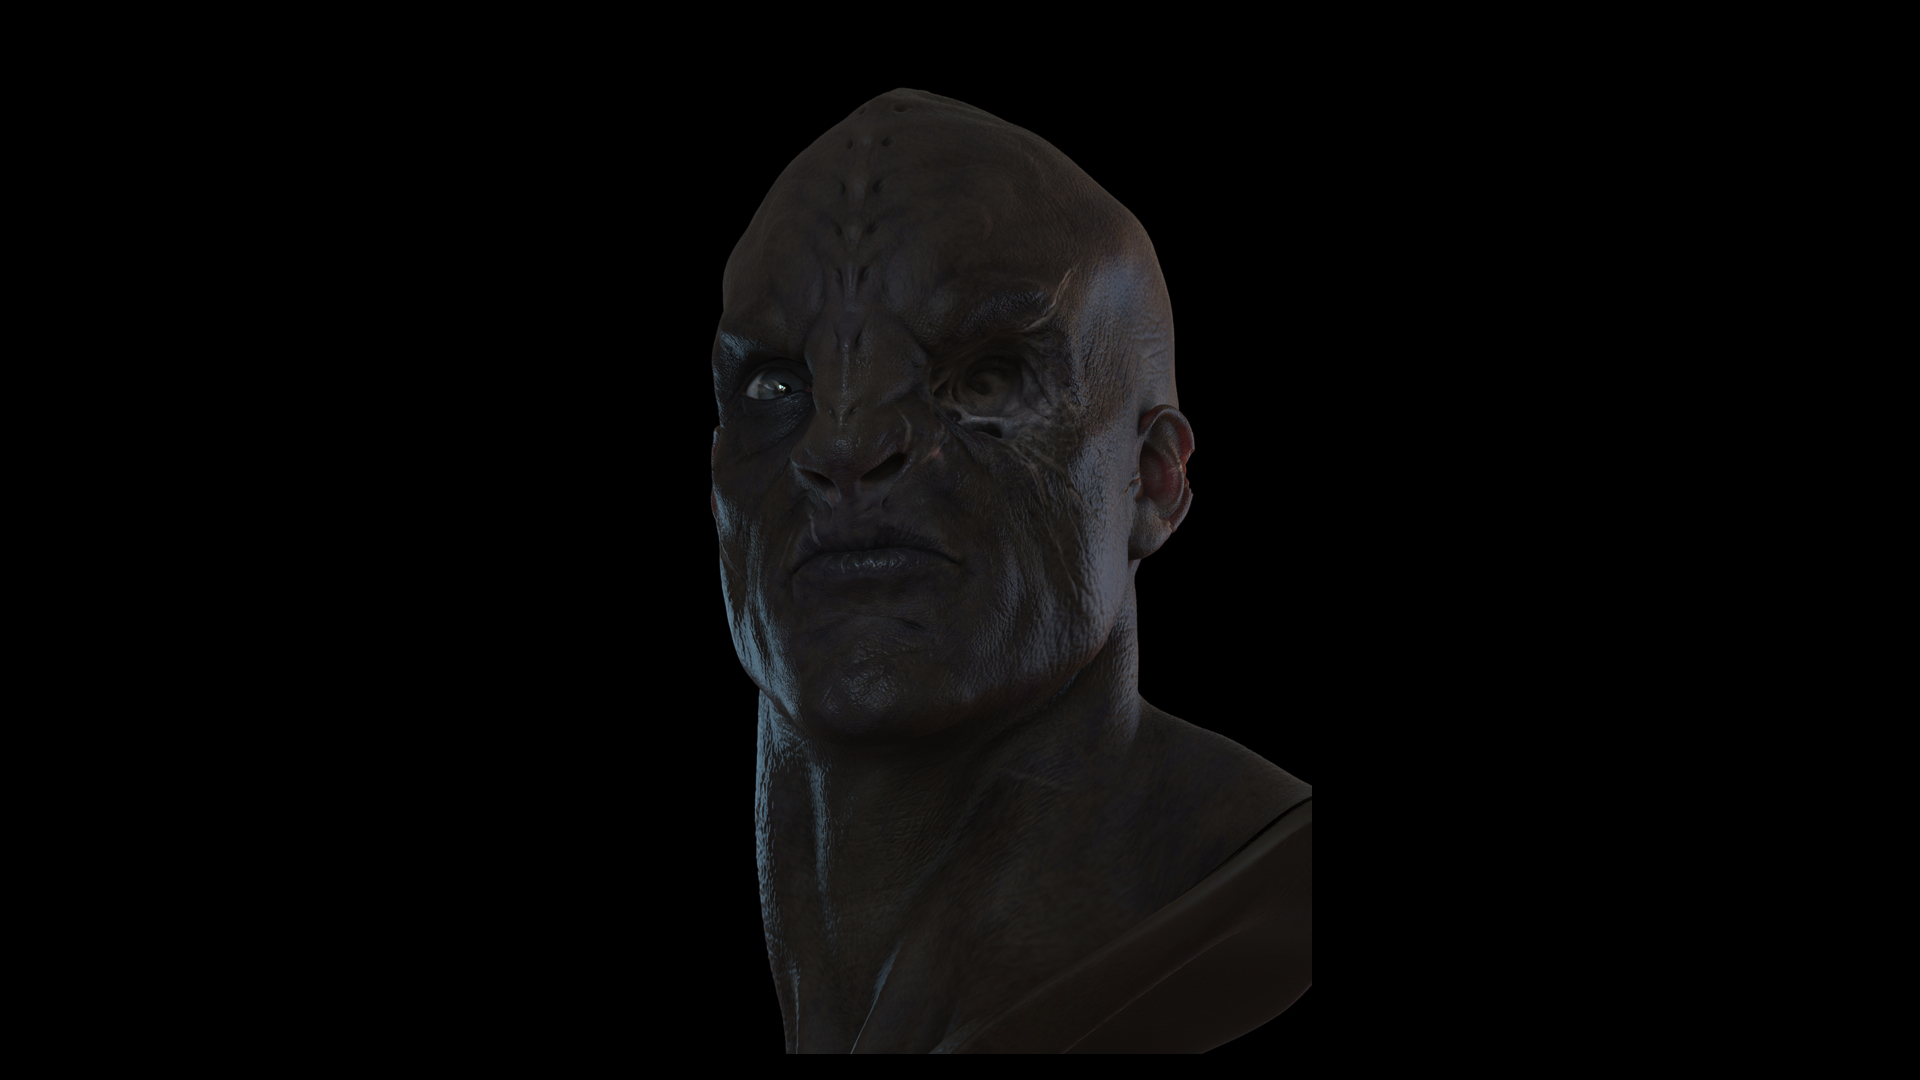 alternate-klingon-designs-for-star-trek-into-darkness-17.jpg